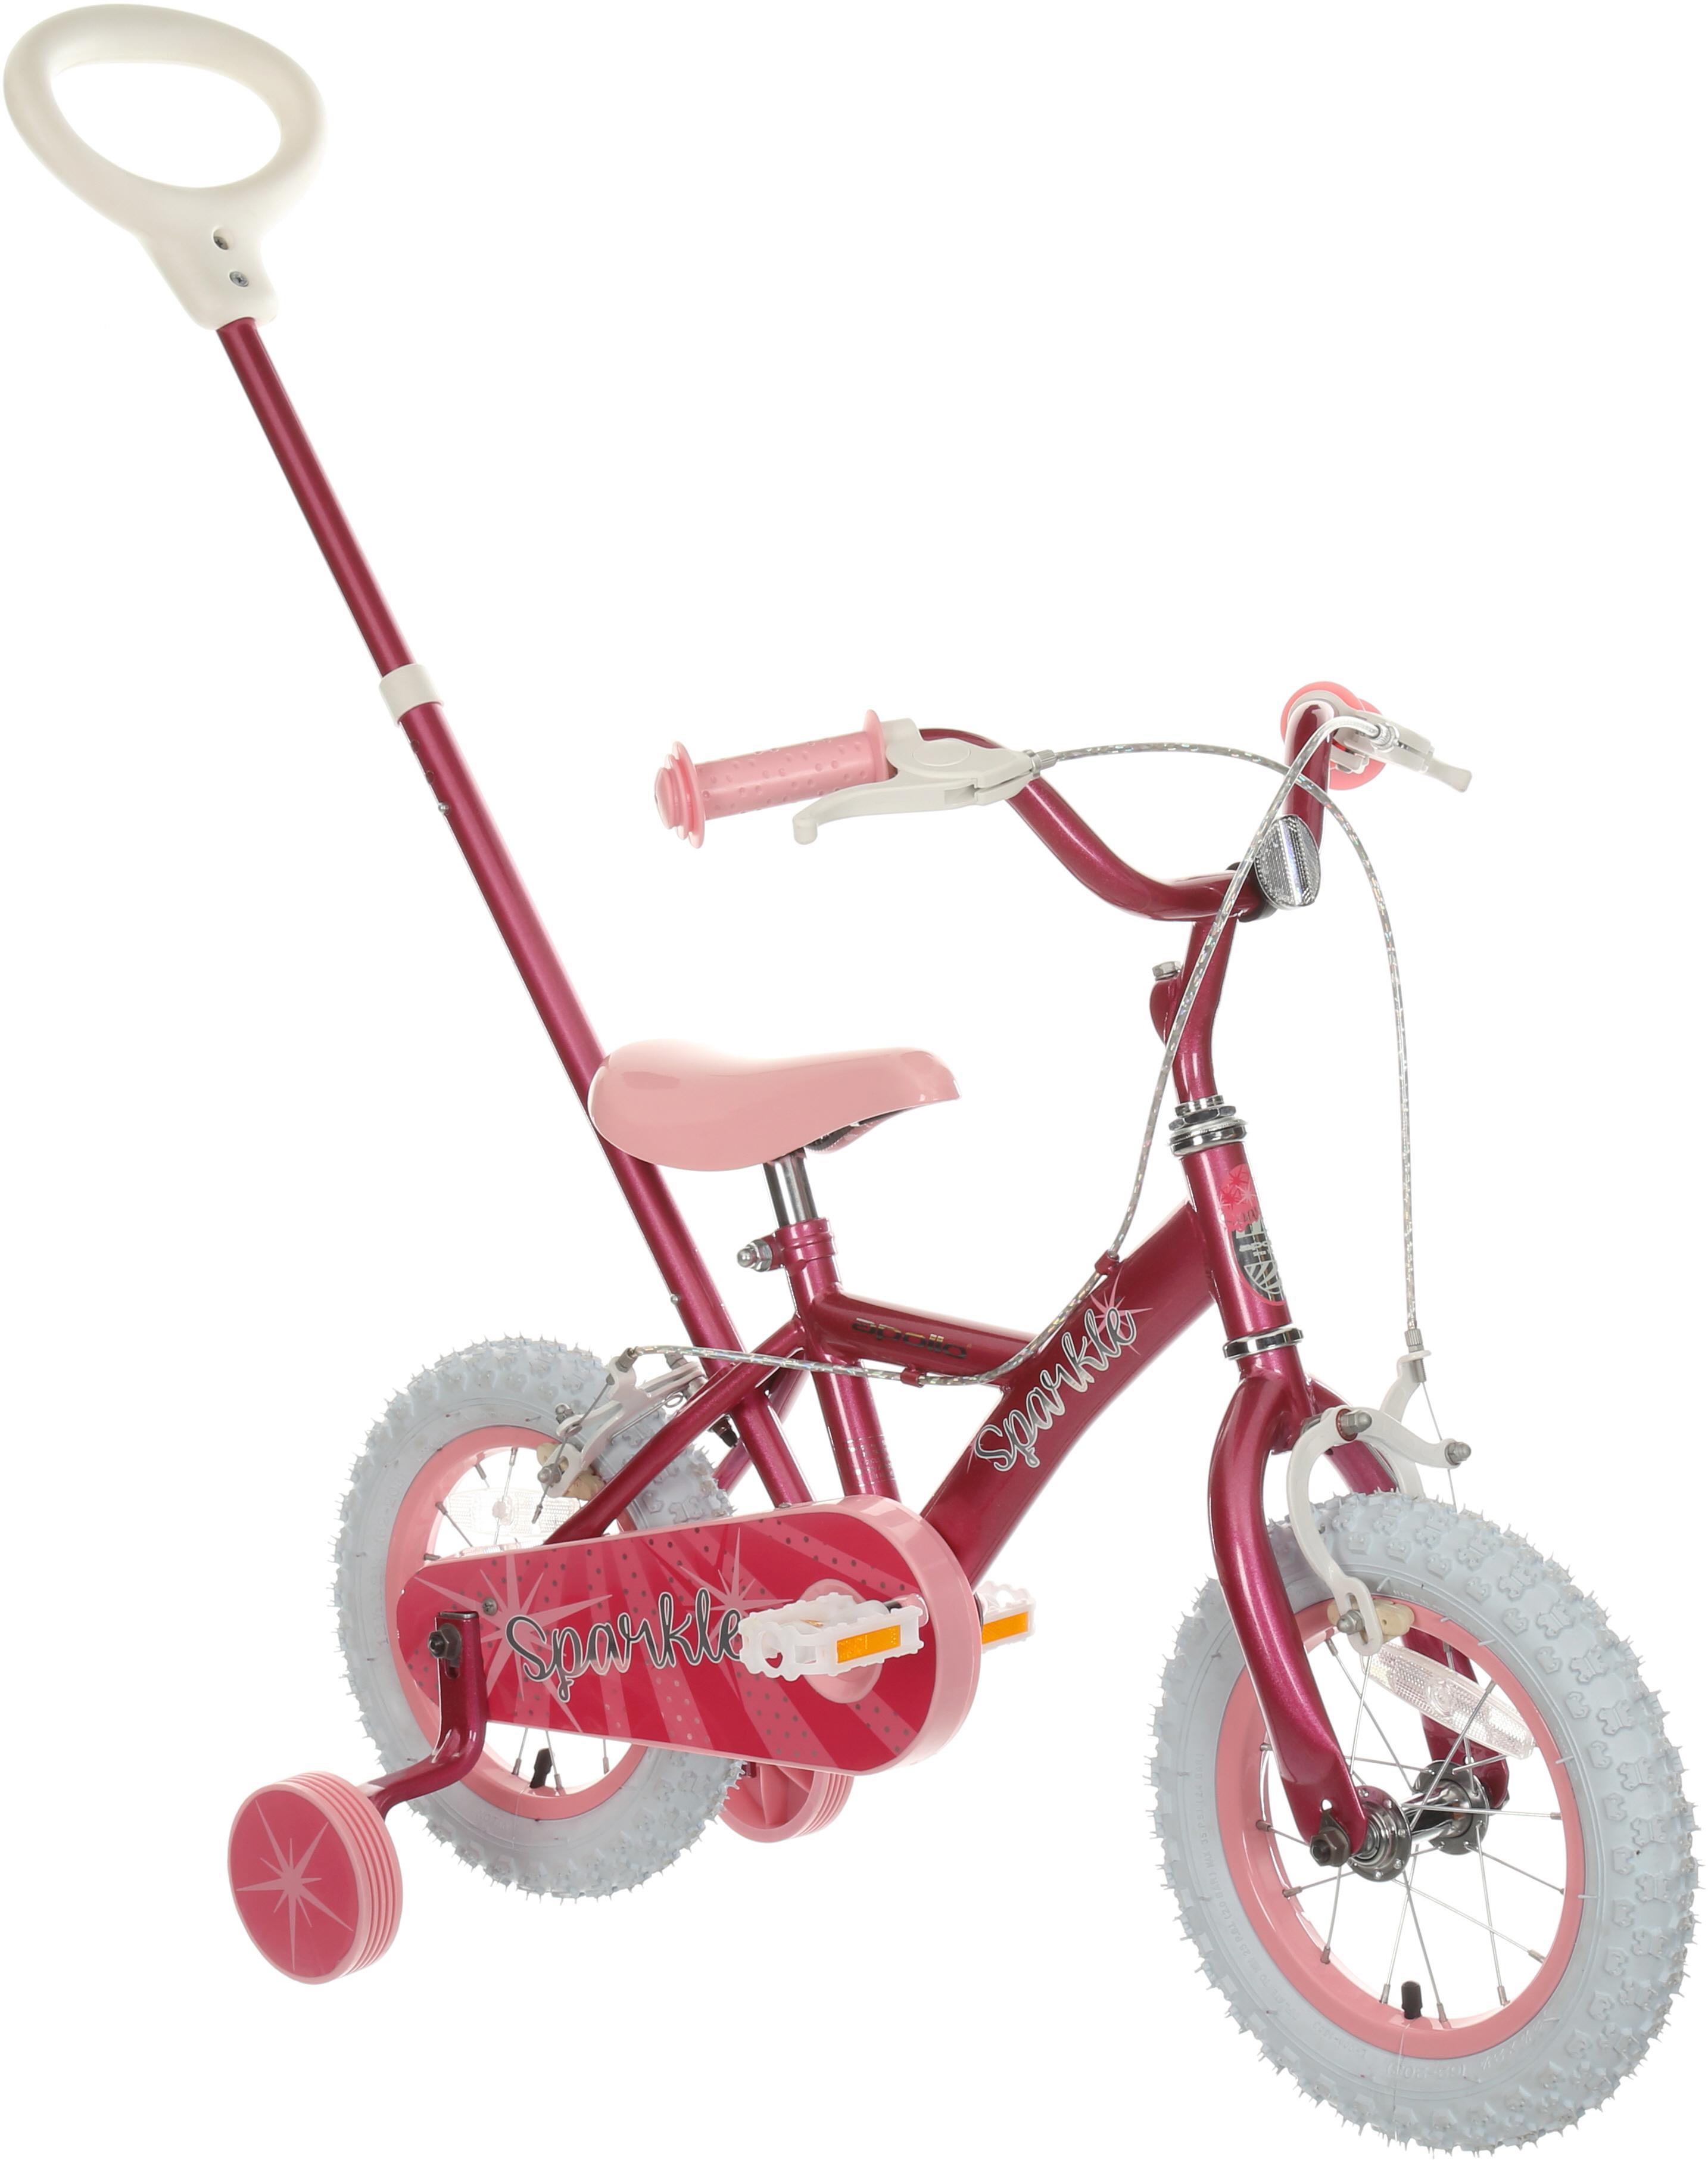 Apollo Sparkle Kids Bike - 12 Inch Wheel